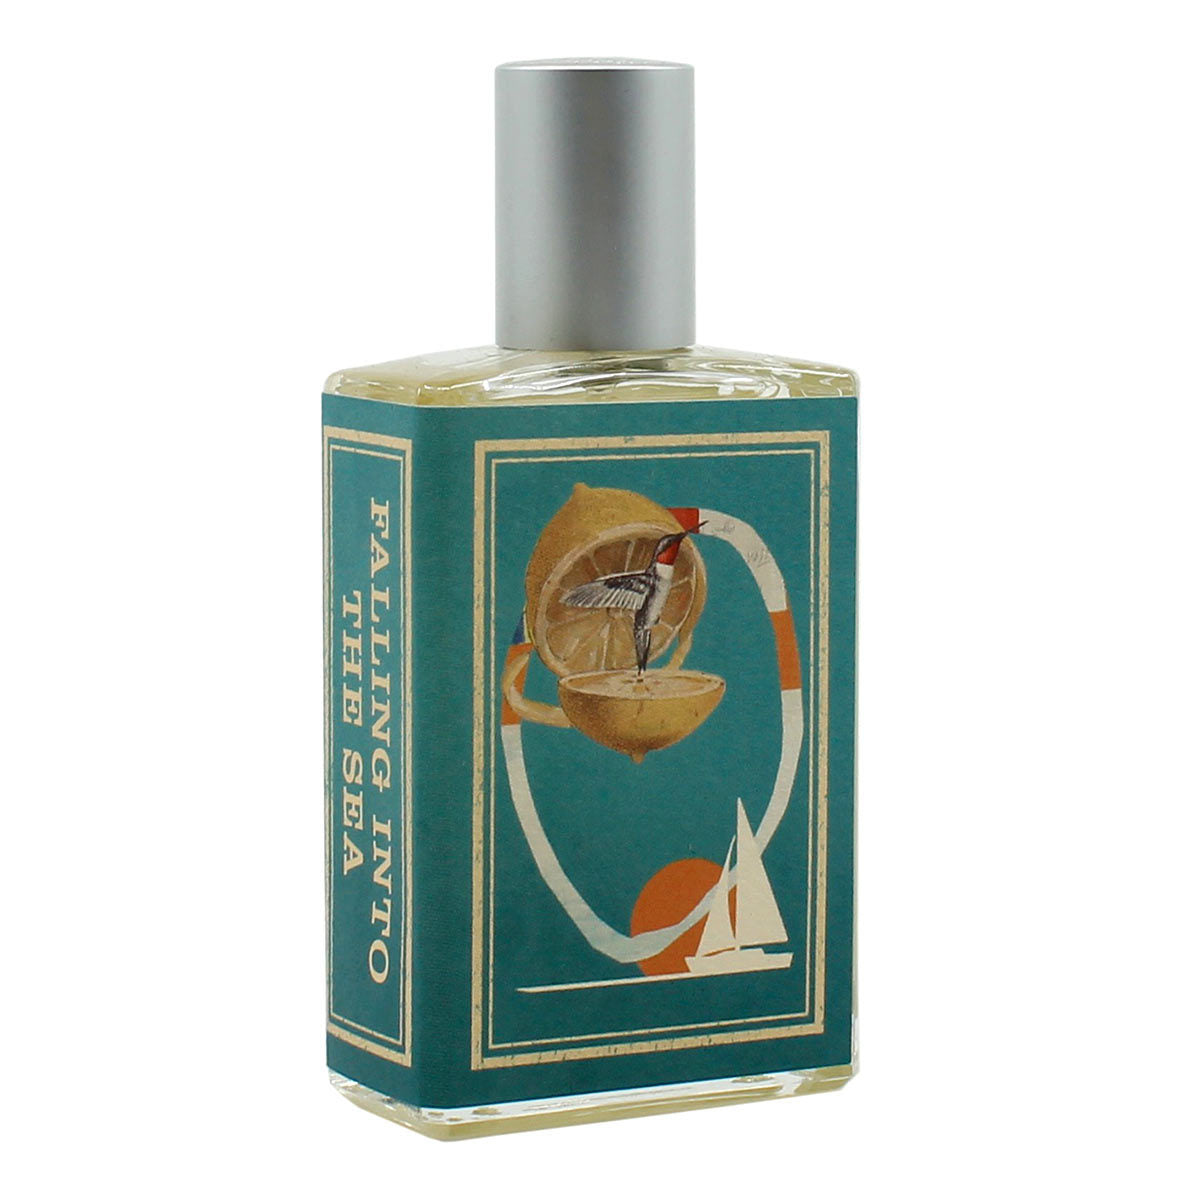 Primary image of Falling Into The Sea Eau de Parfum